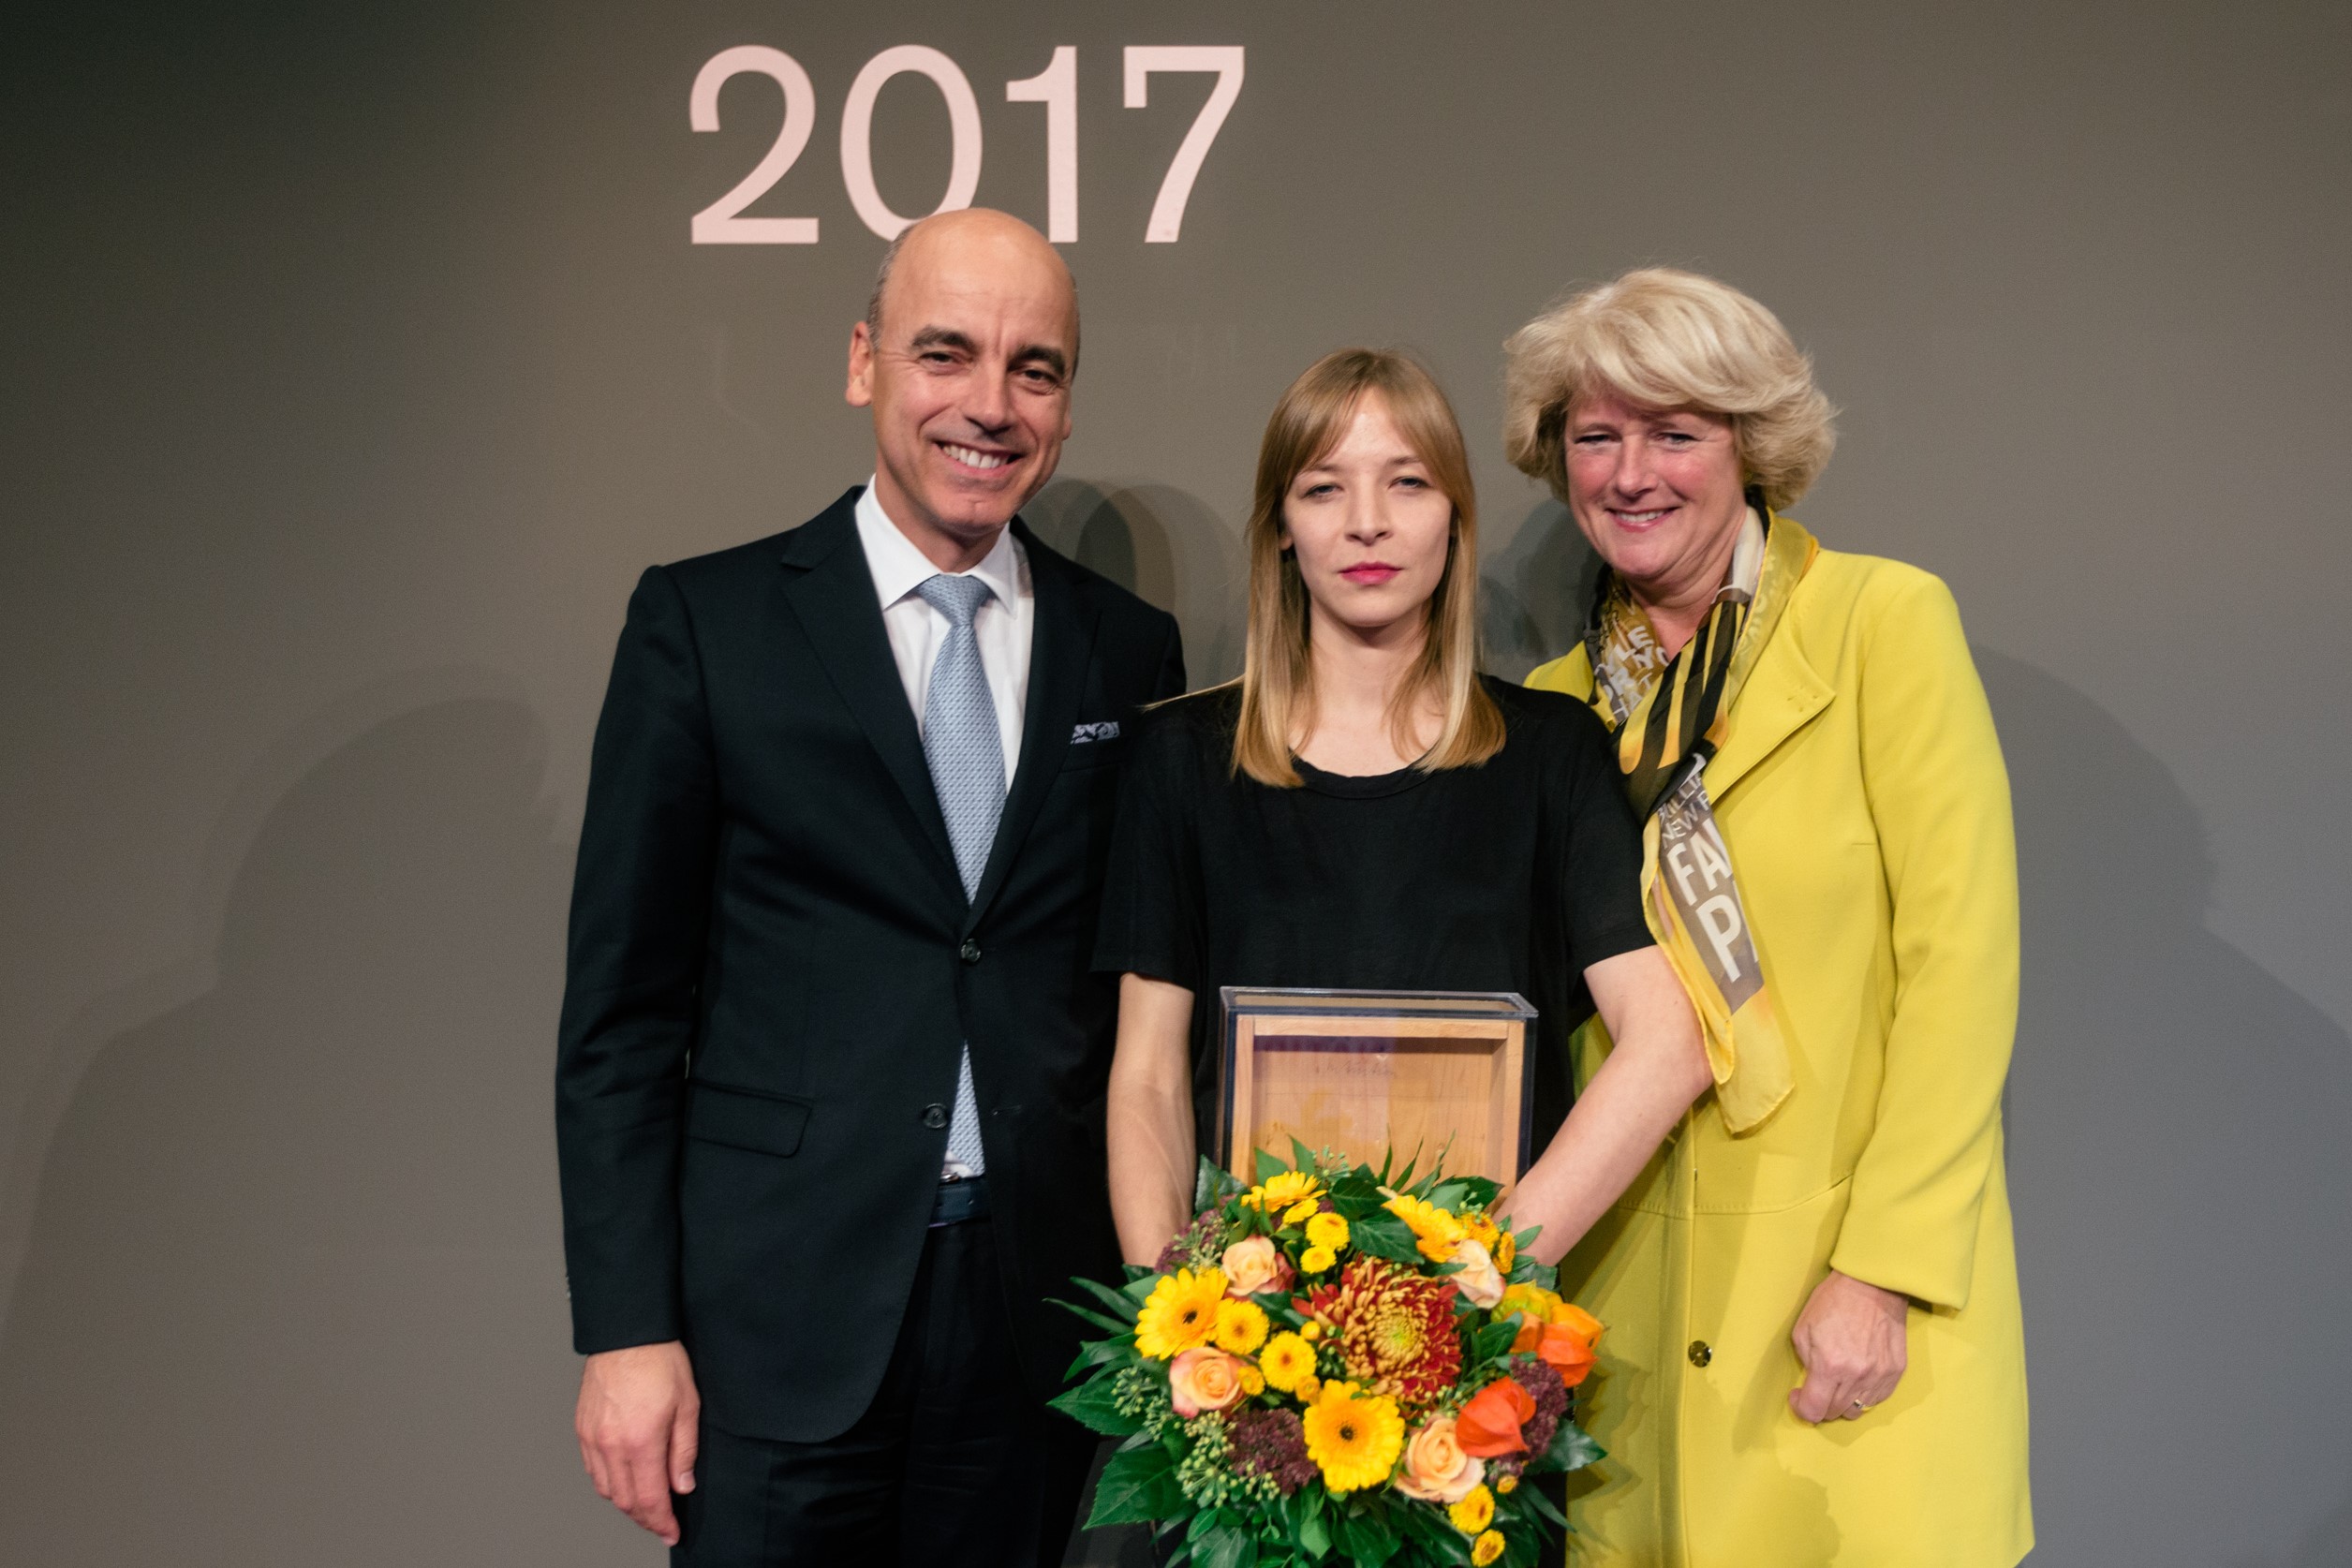 Agnieszka Polska wins the Preis der Nationalgalerie 2017 – Sandra Wollner awarded for the Förderpreis für Filmkunst. BMW as exclusive partner.